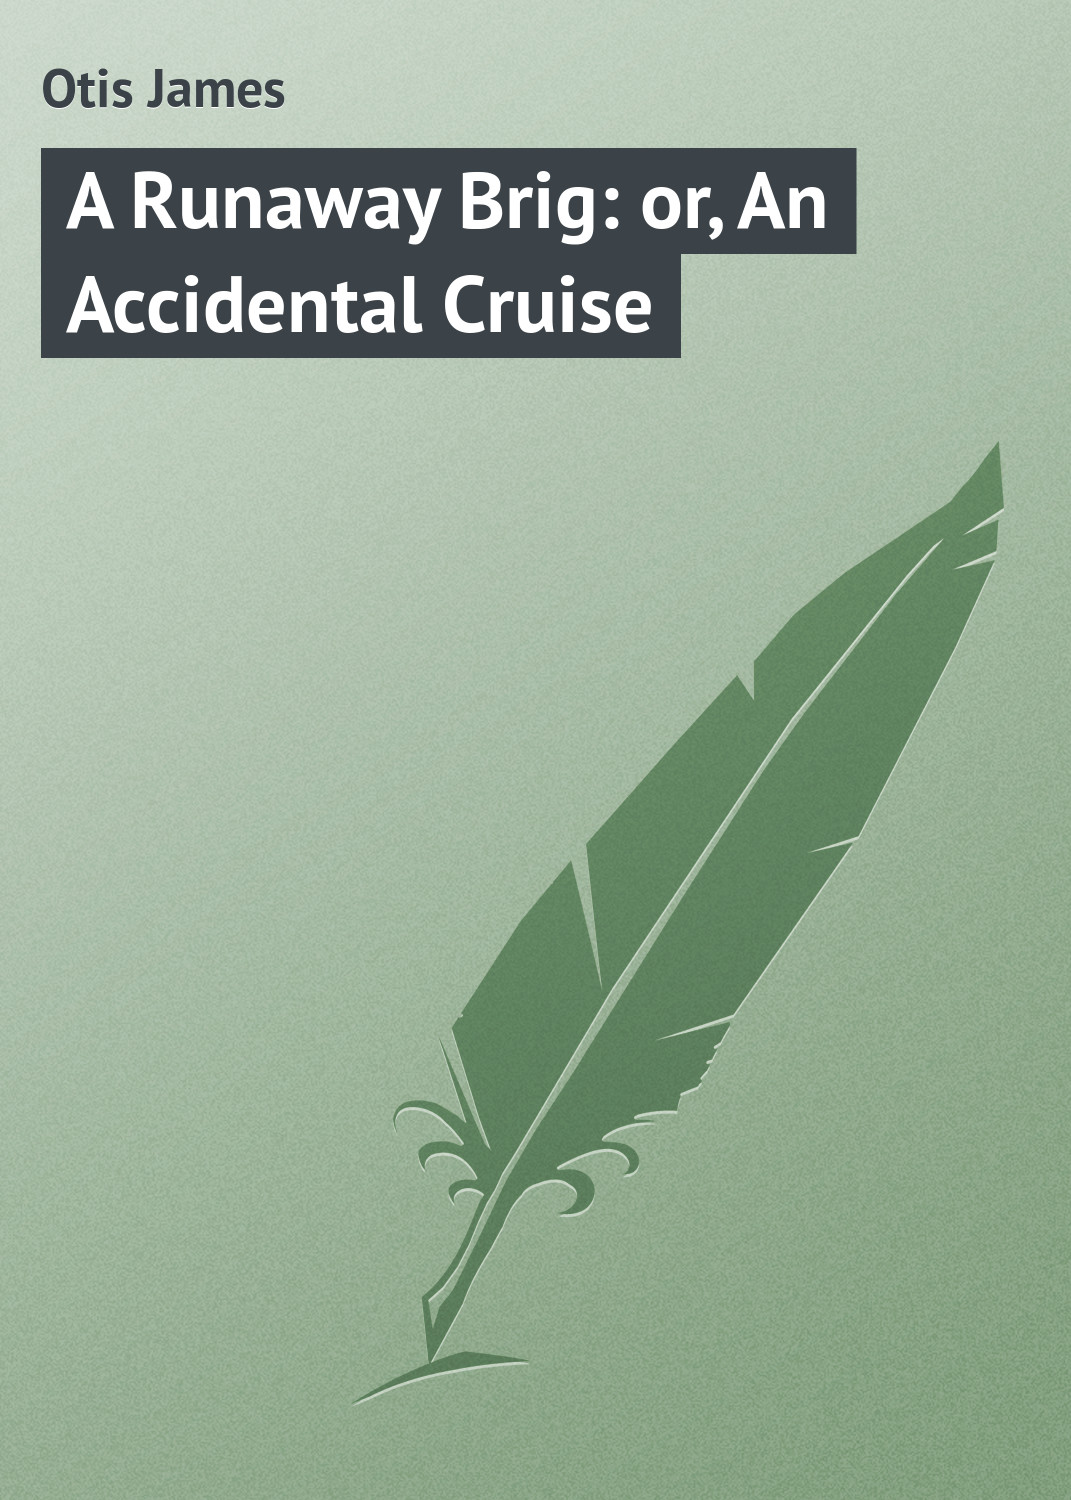 A Runaway Brig: or, An Accidental Cruise